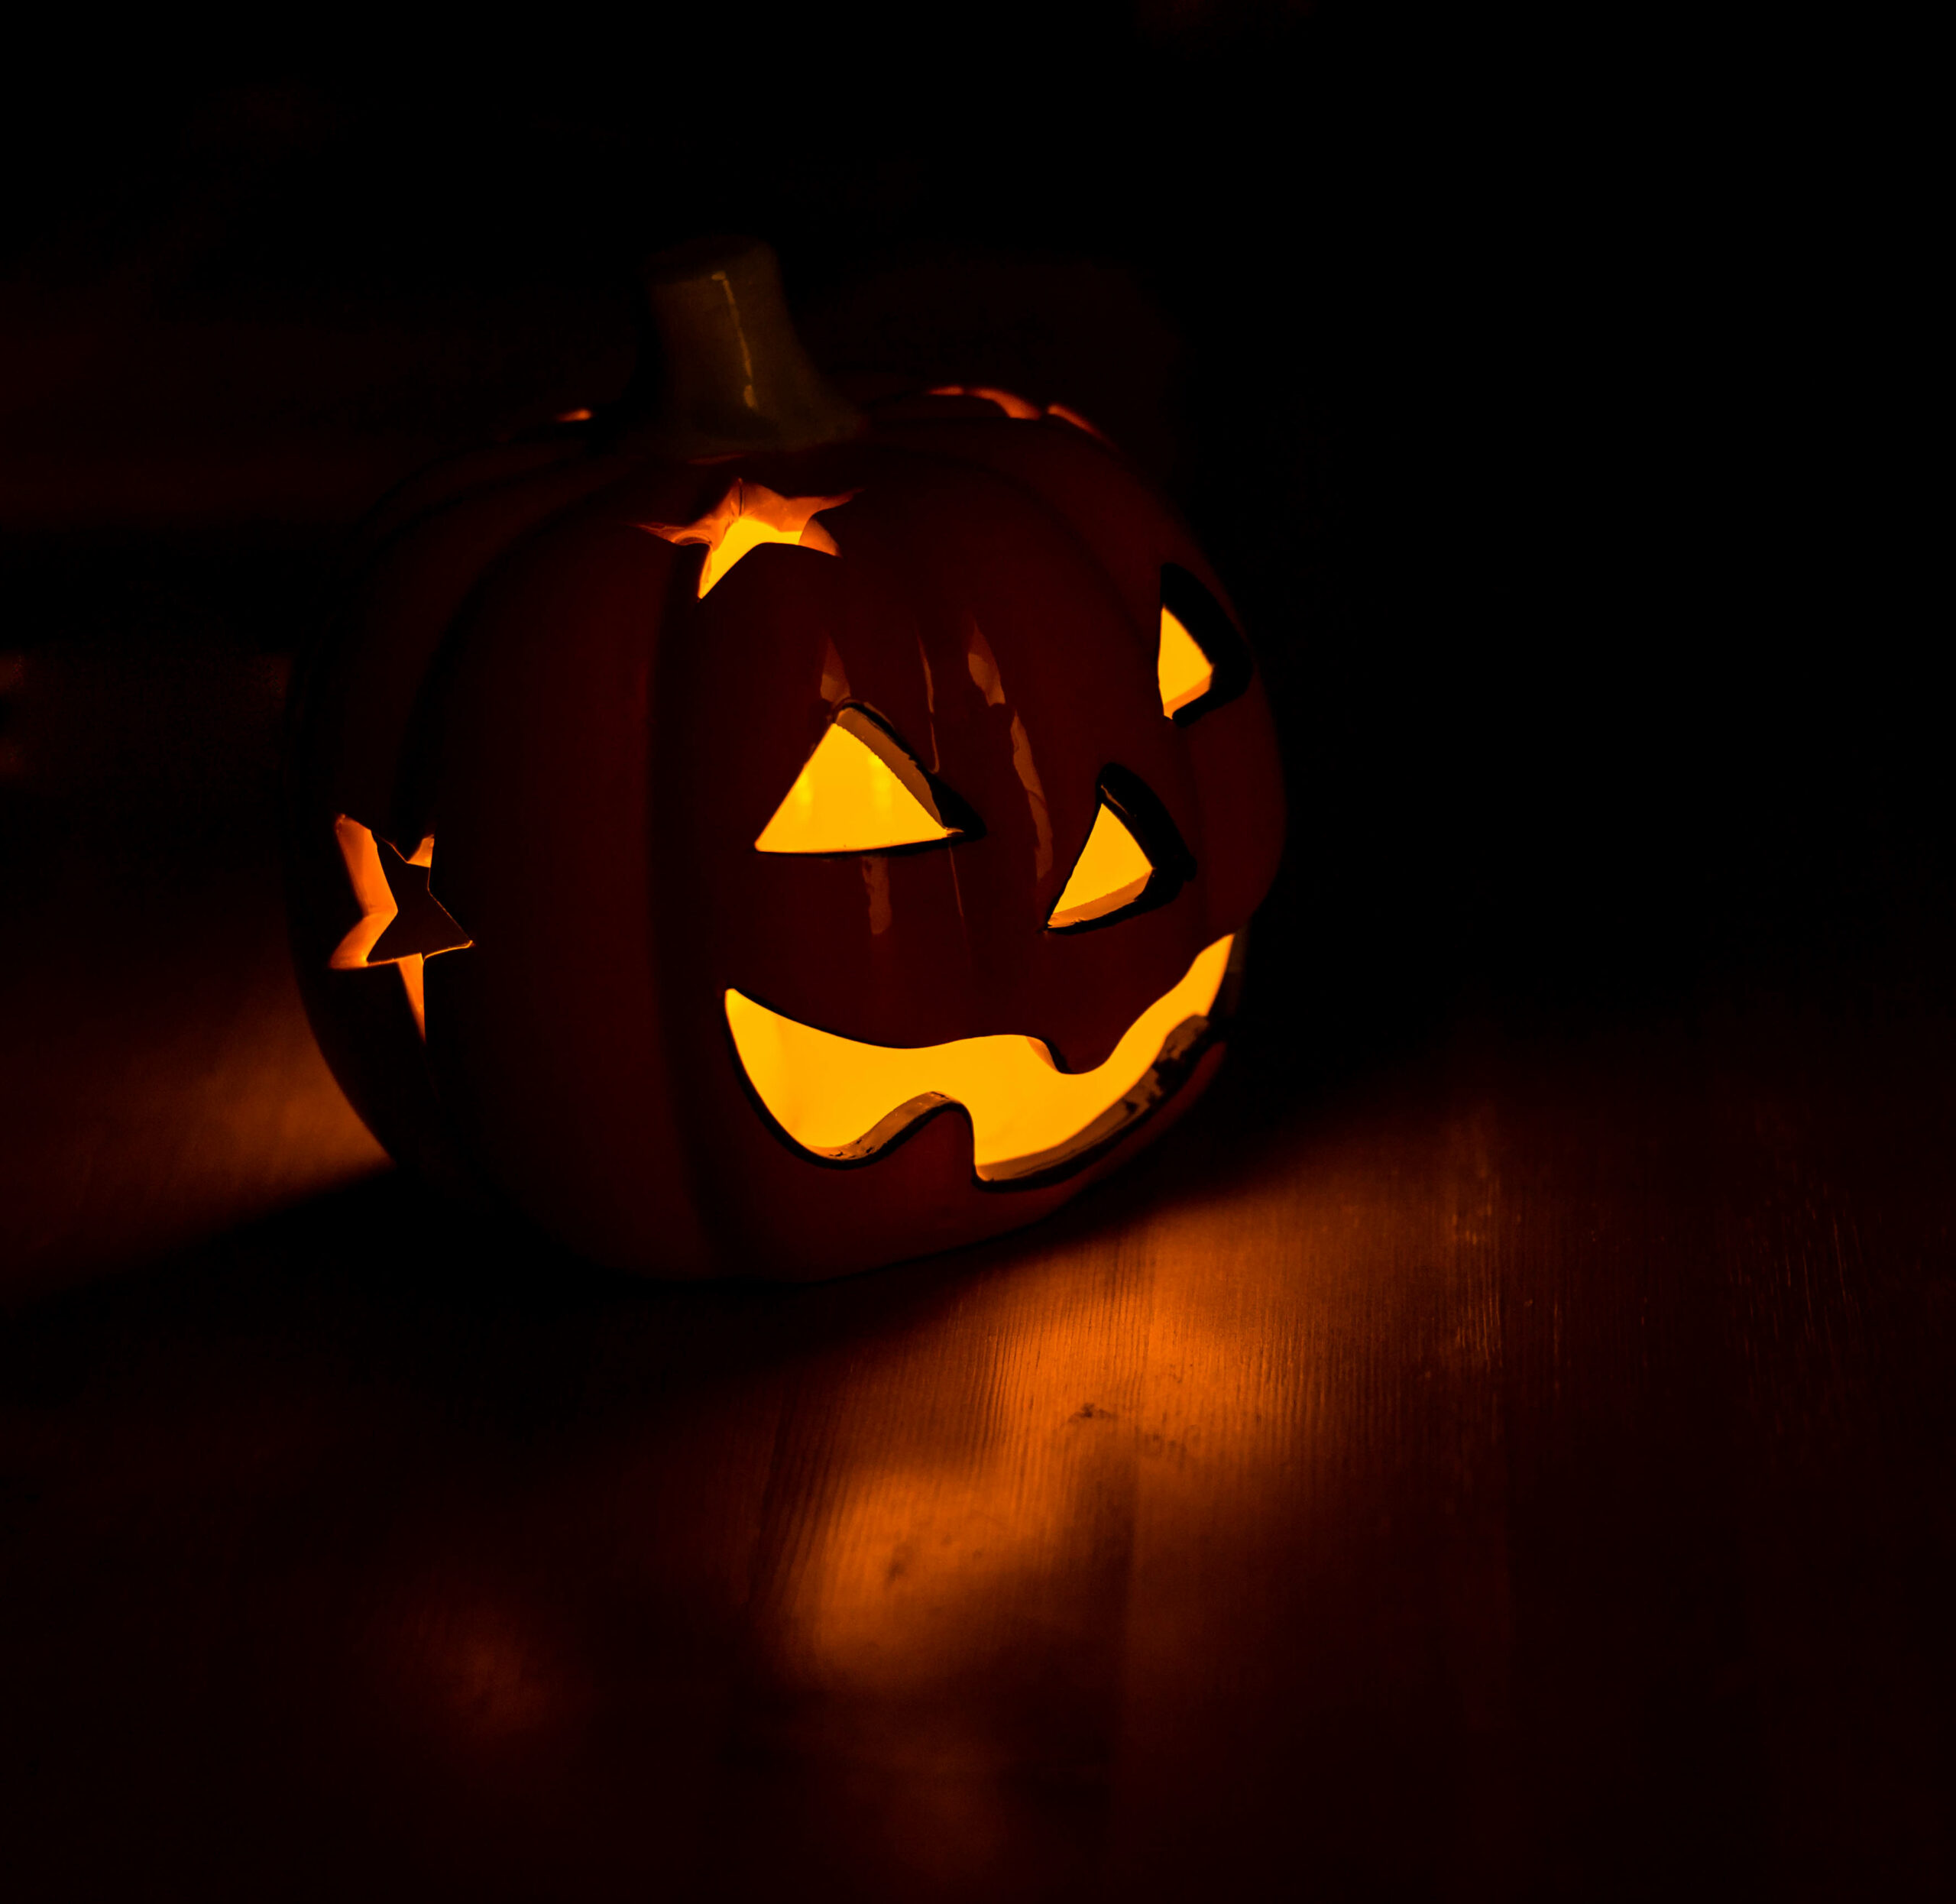 A Halloween pumpkin looks rather scary.